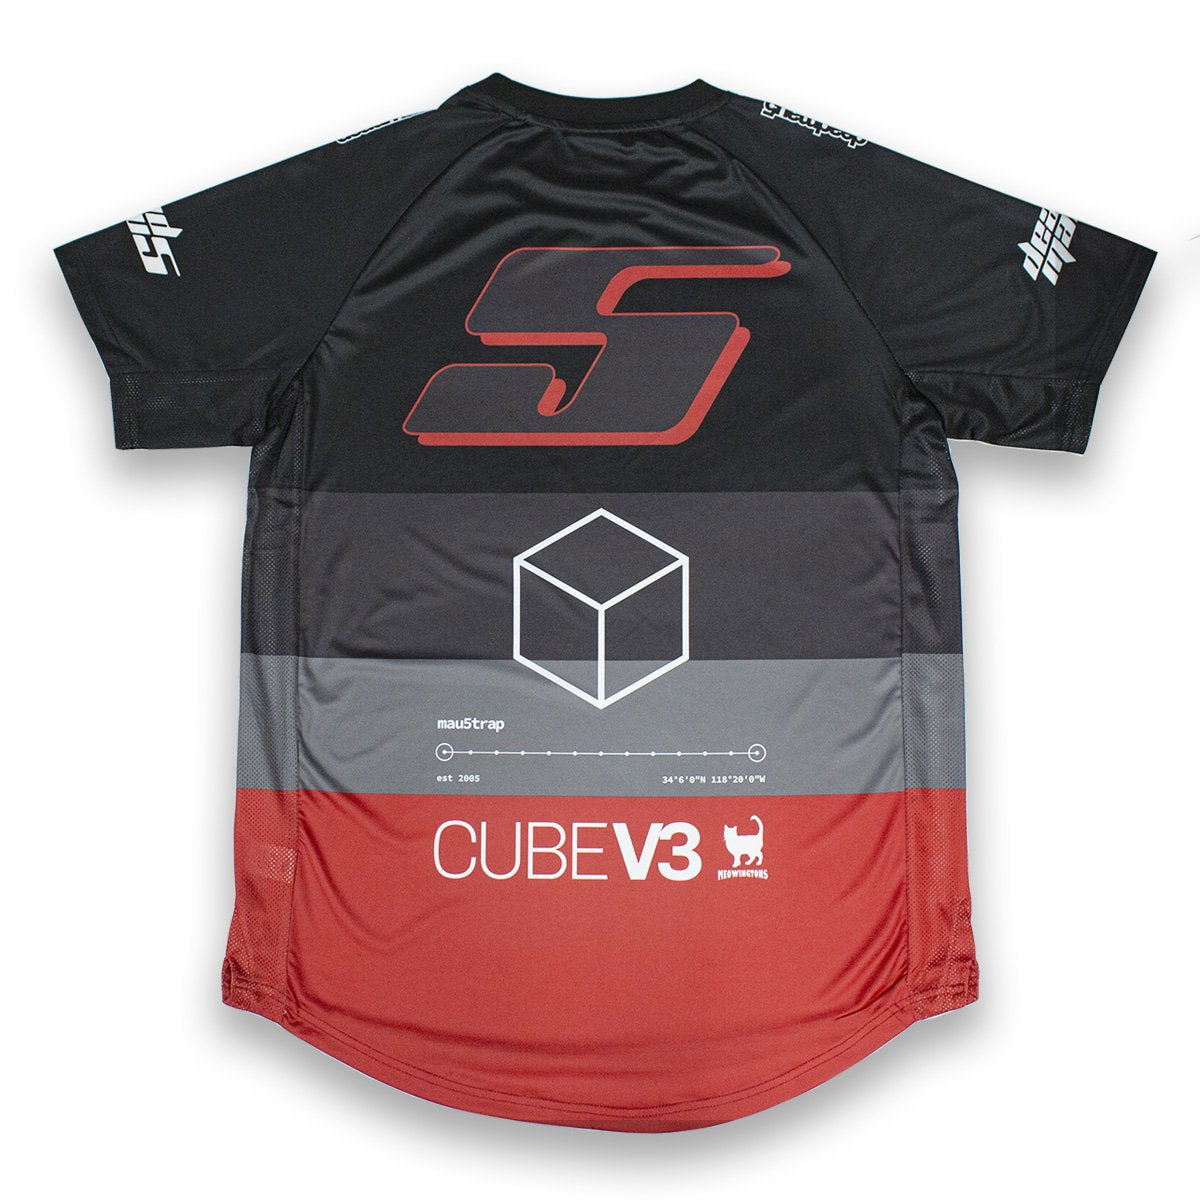 Cube V3 Soccer Jersey